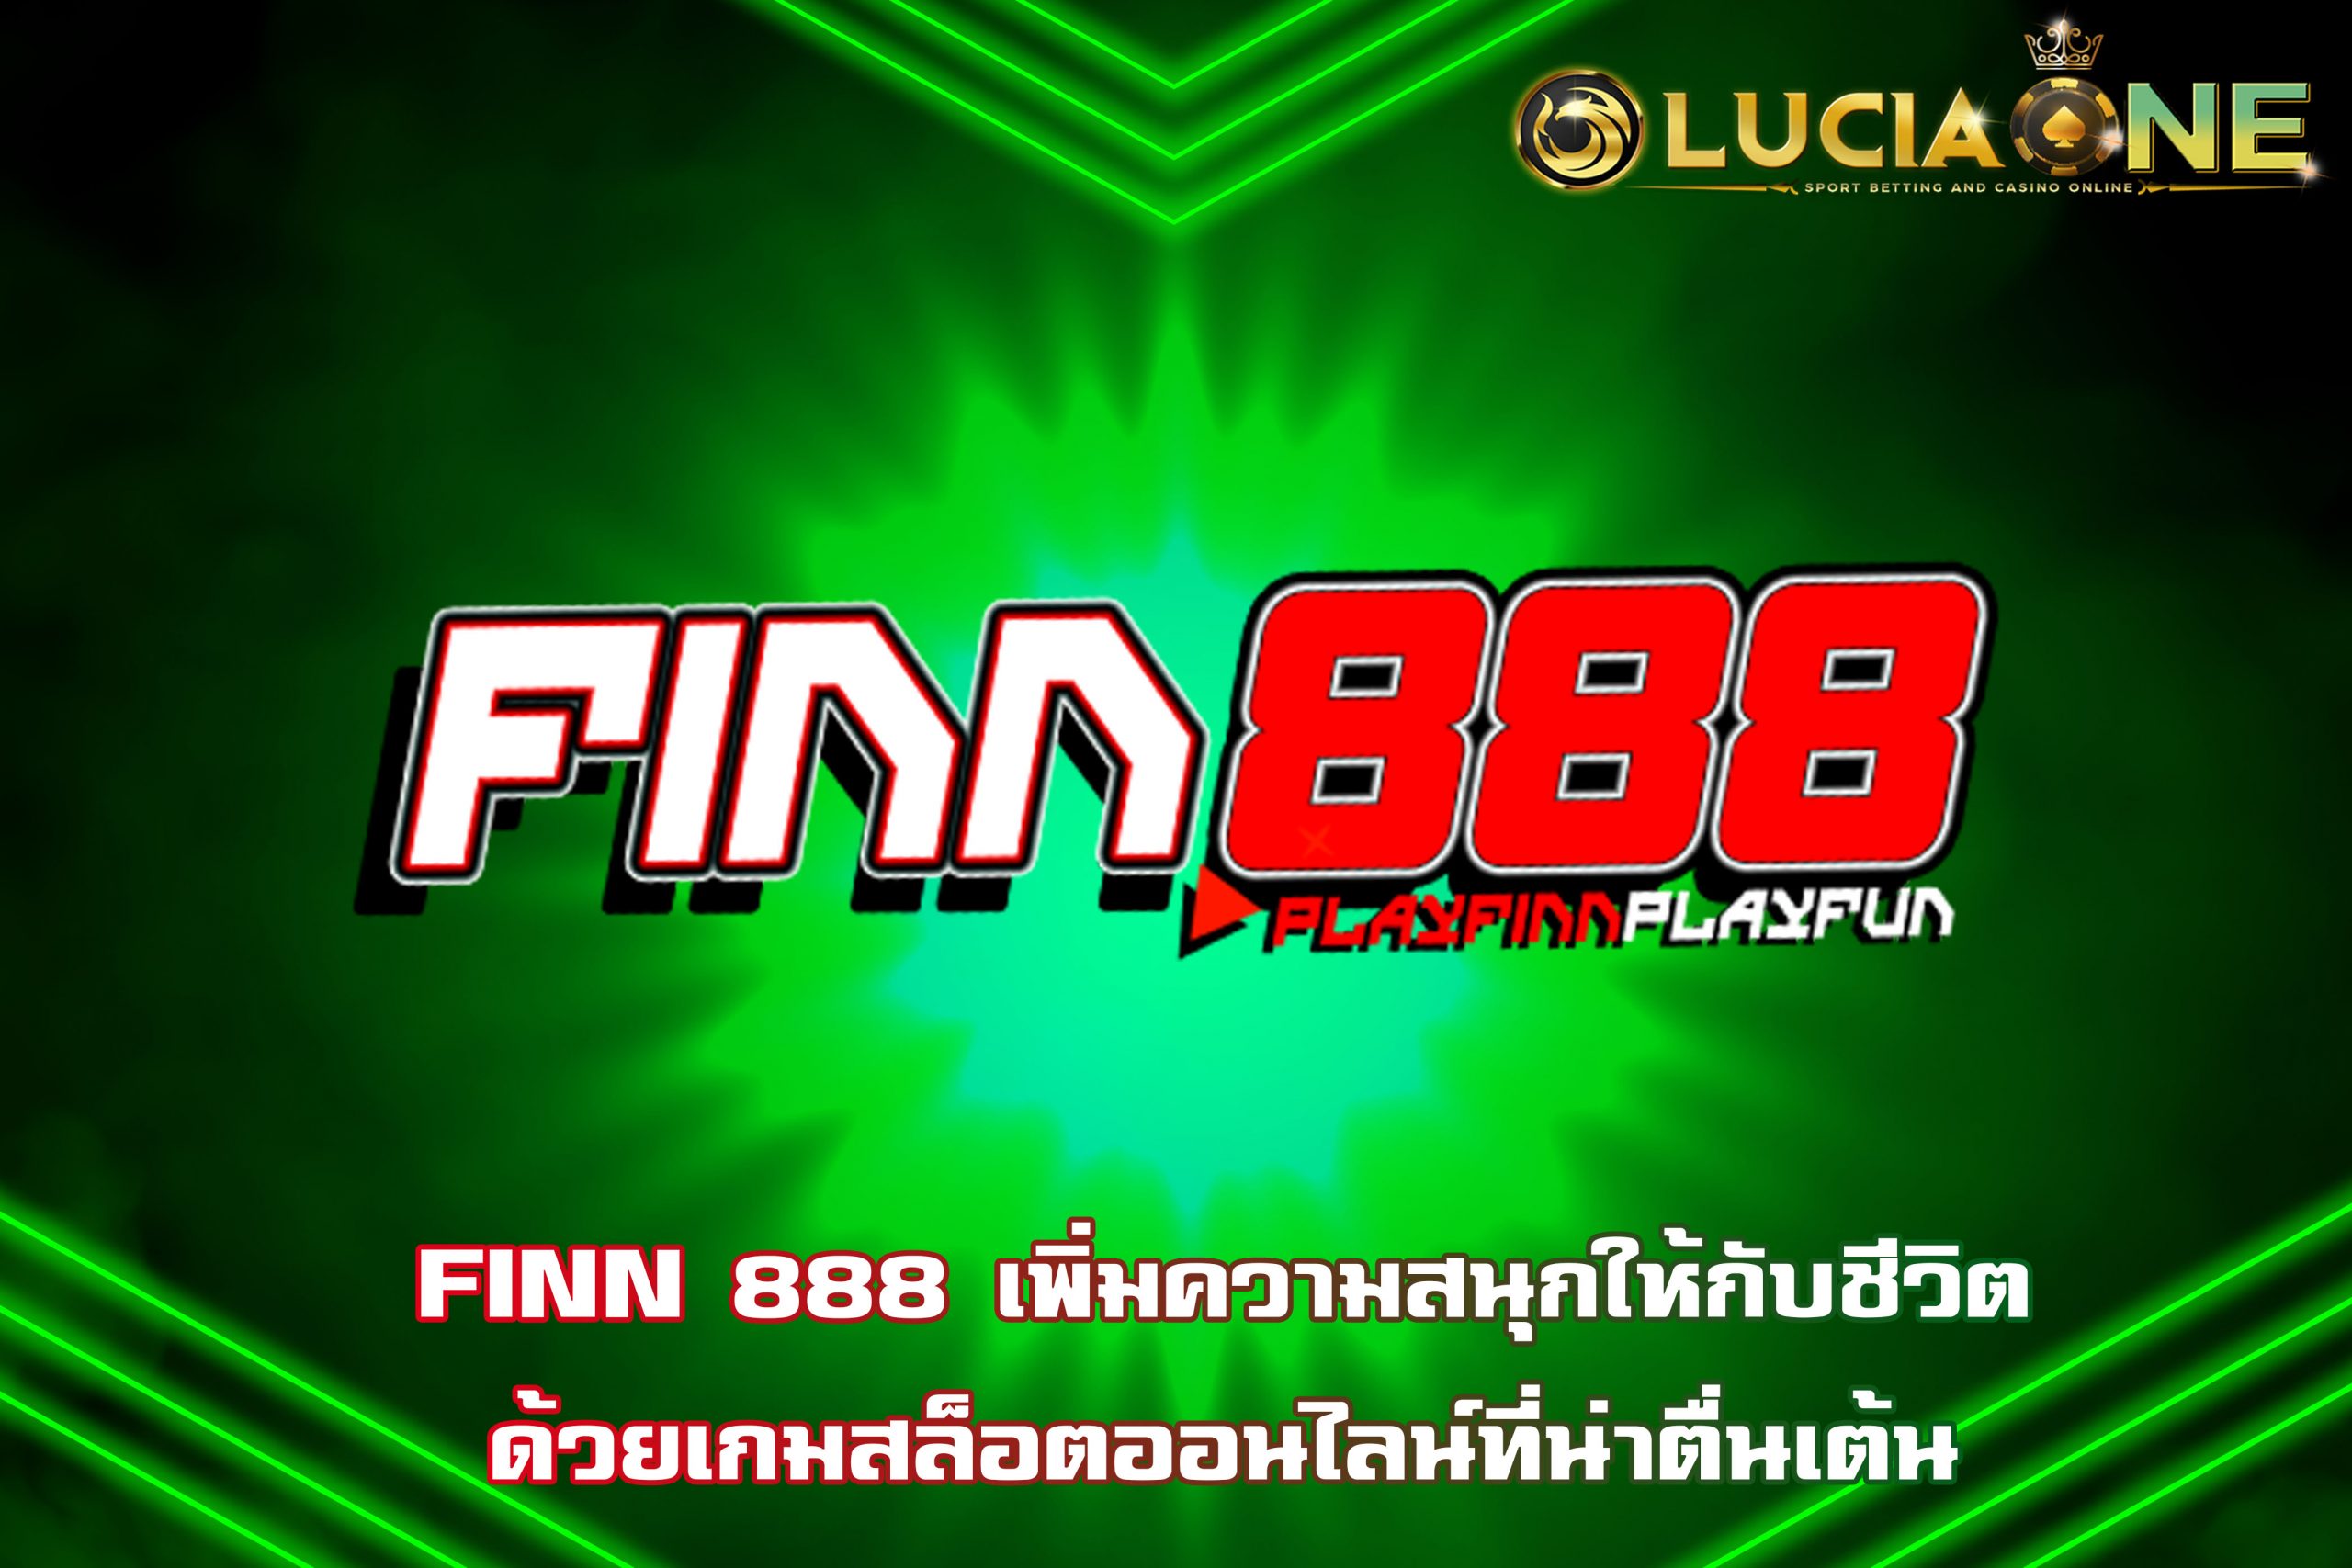 FINN 888 เพิ่มความสนุกให้กับชีวิตด้วยเกมสล็อตออนไลน์ที่น่าตื่นเต้น